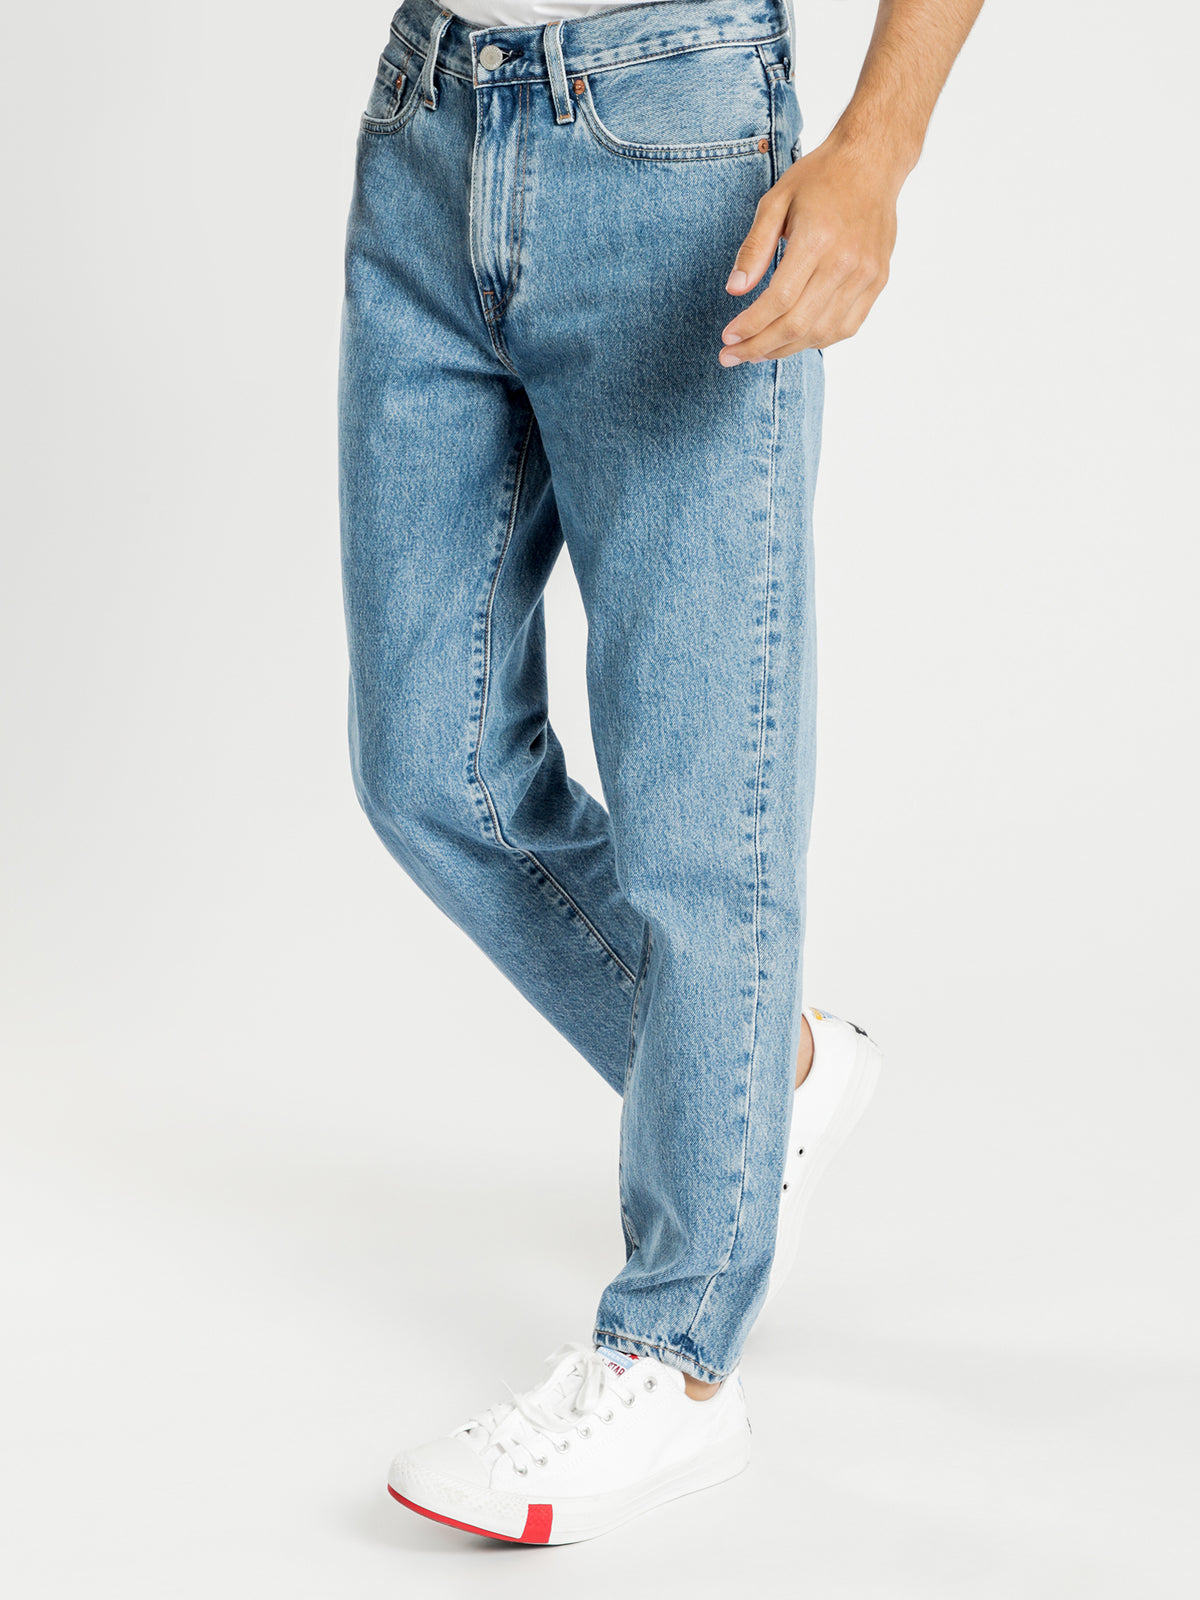 562 Loose Taper Jeans in Shorty Light Denim